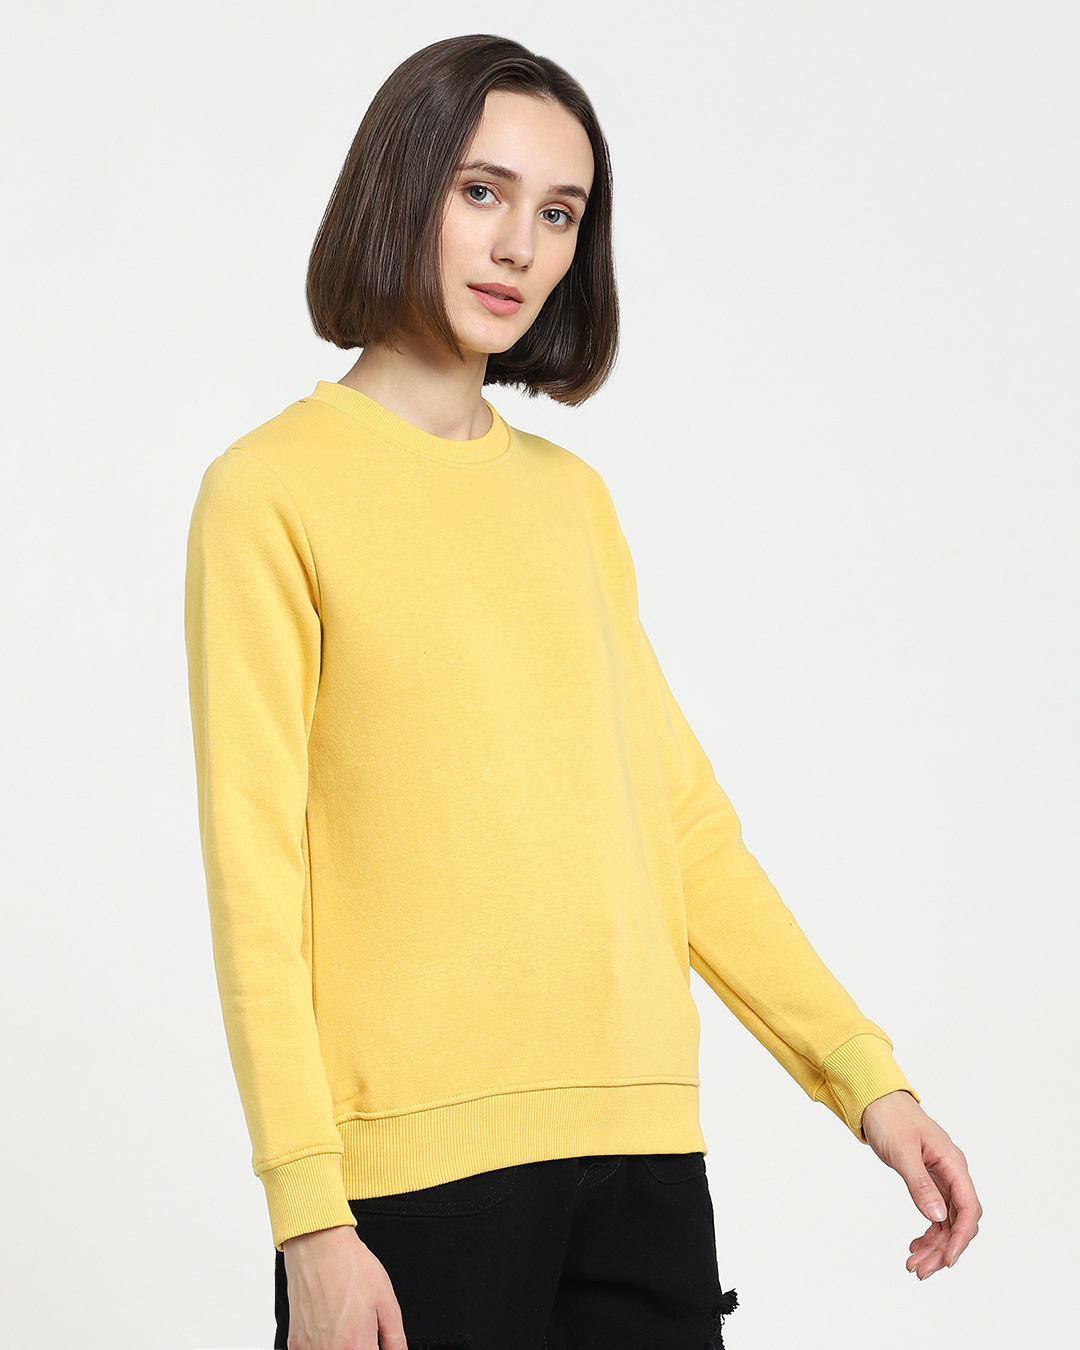 Shop Women's Yellow Sweater-Back